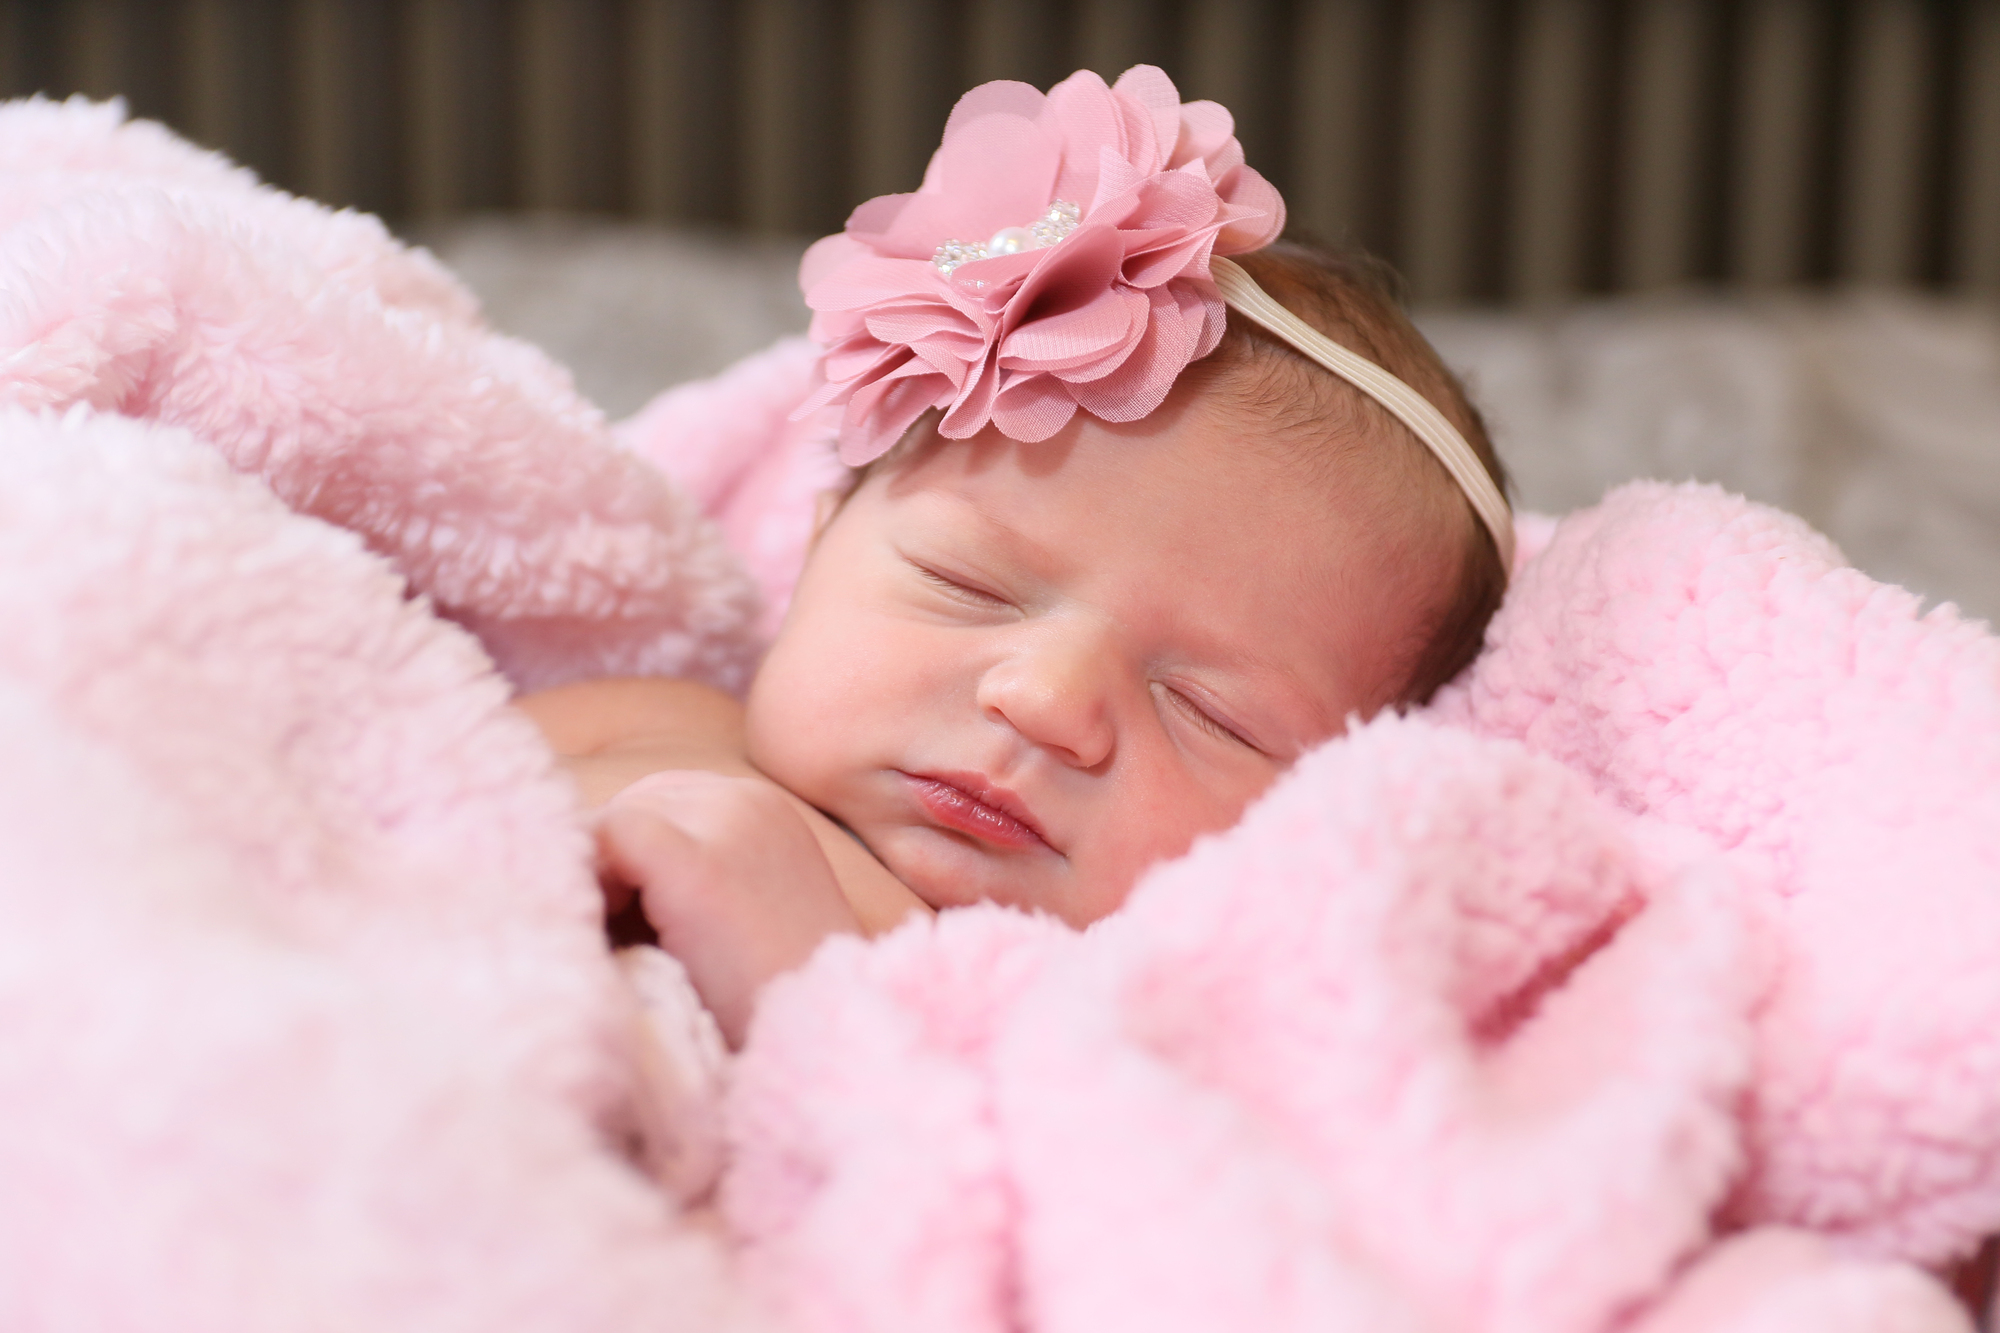 newborn baby girl wrapped in a fluffy pink blanket wearing a flower headband